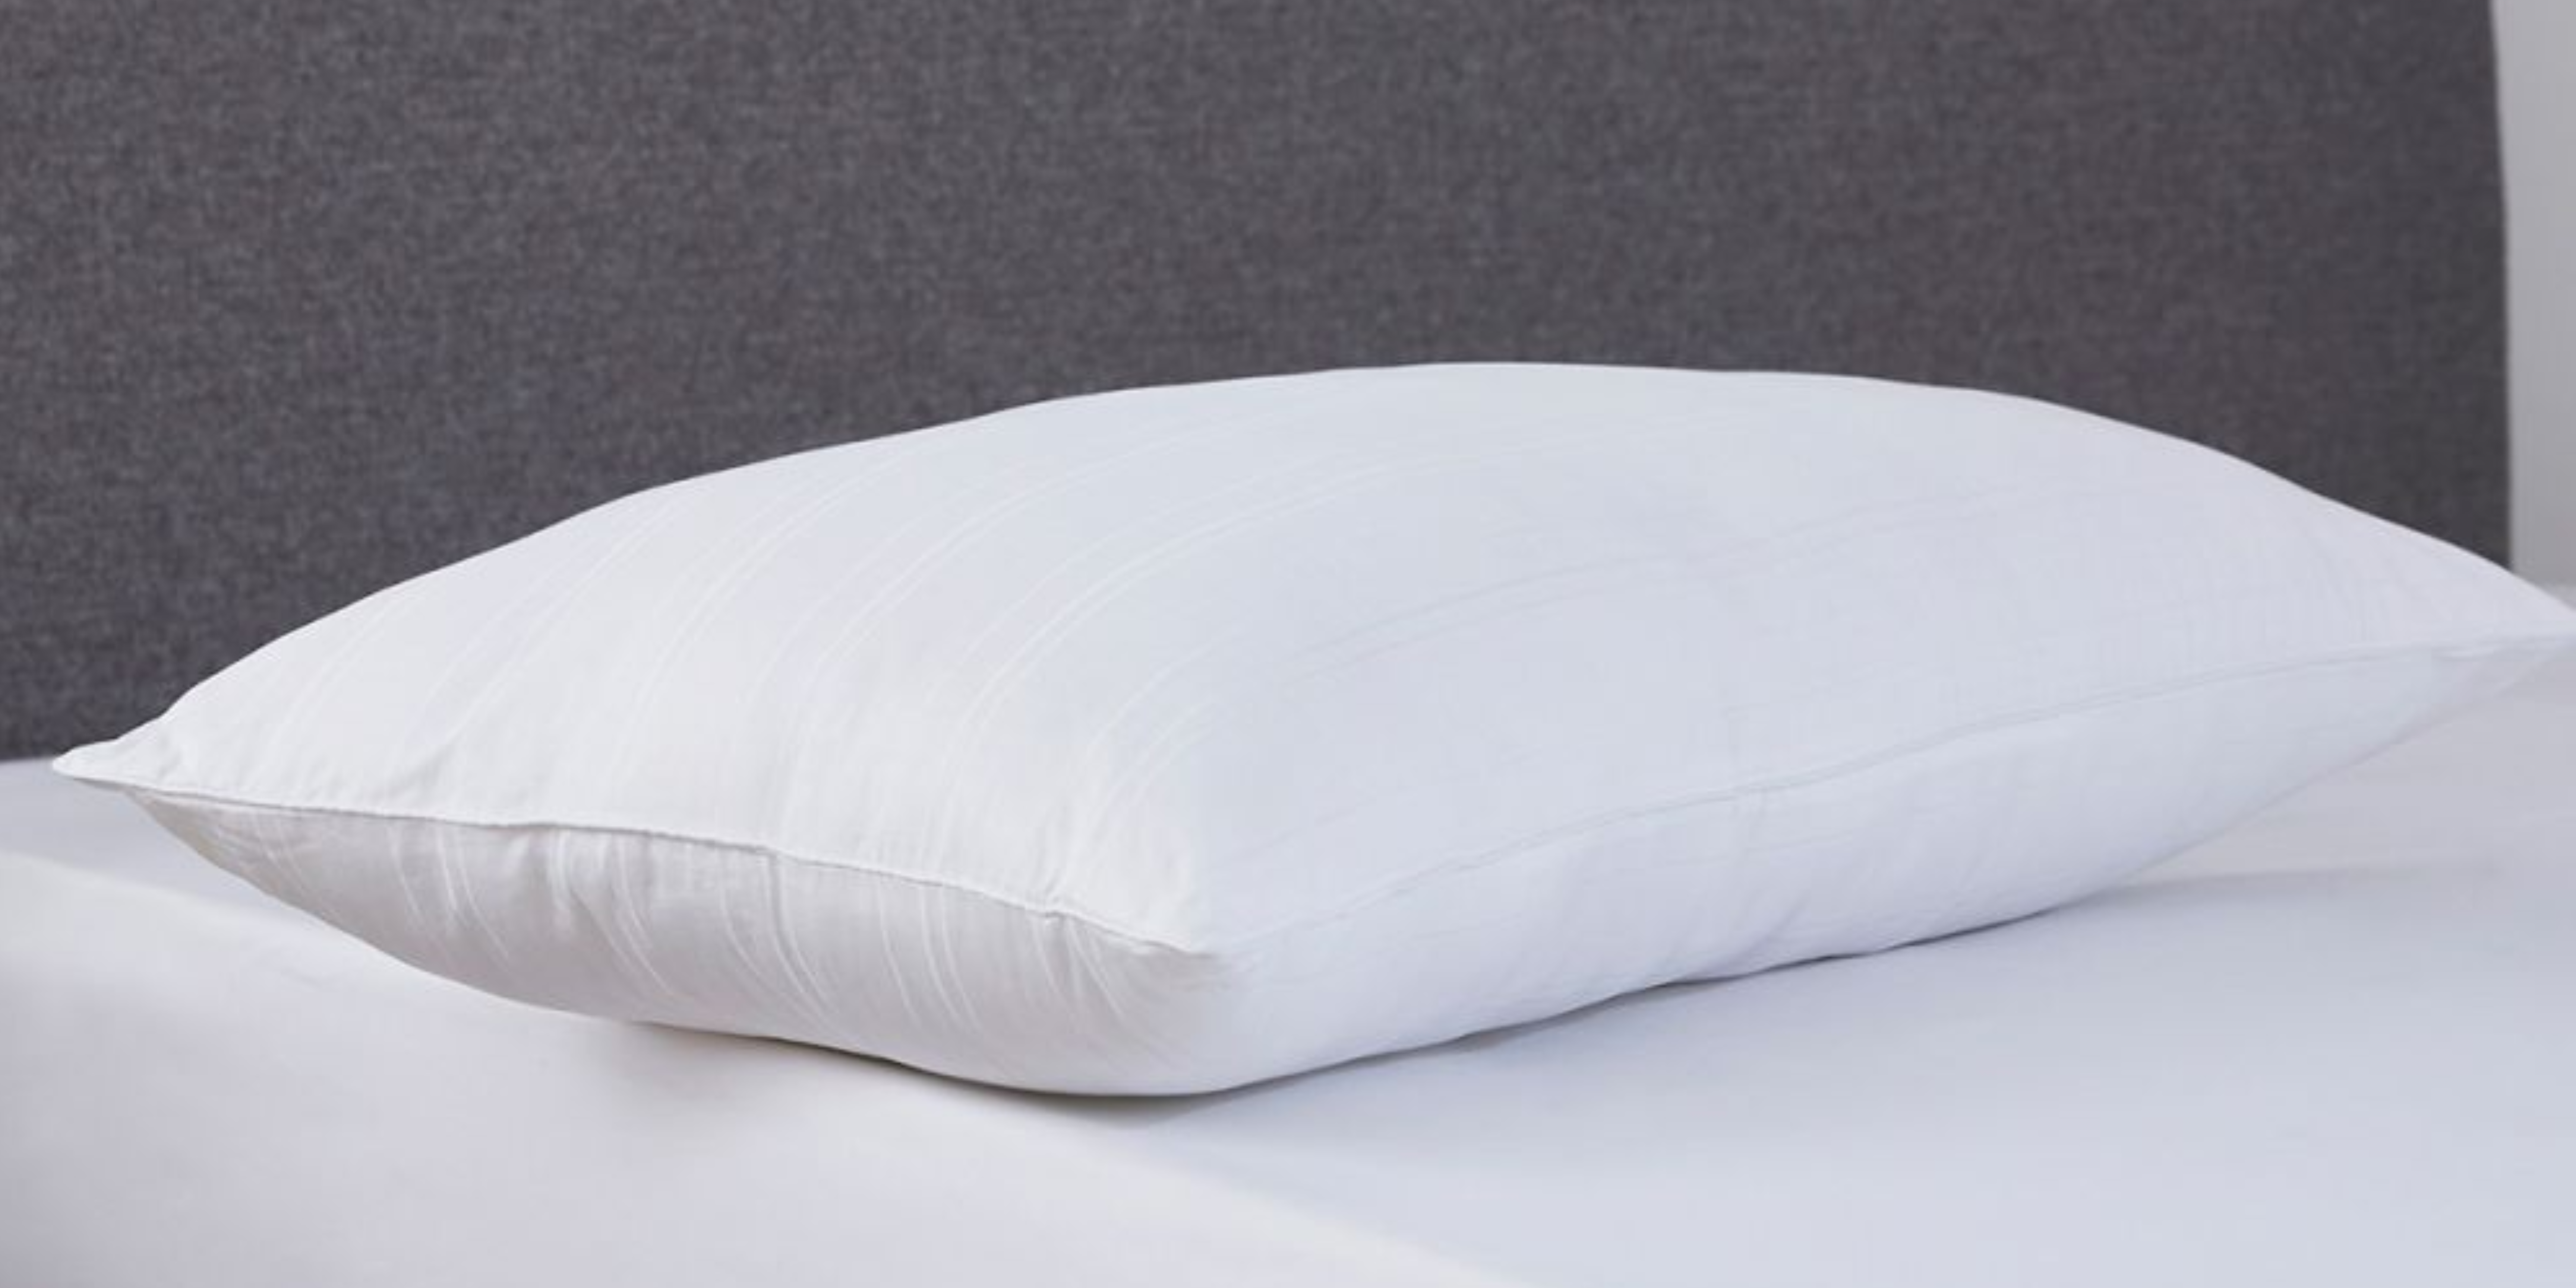 Heatwave Sleep Hacks - Cooling Pillow